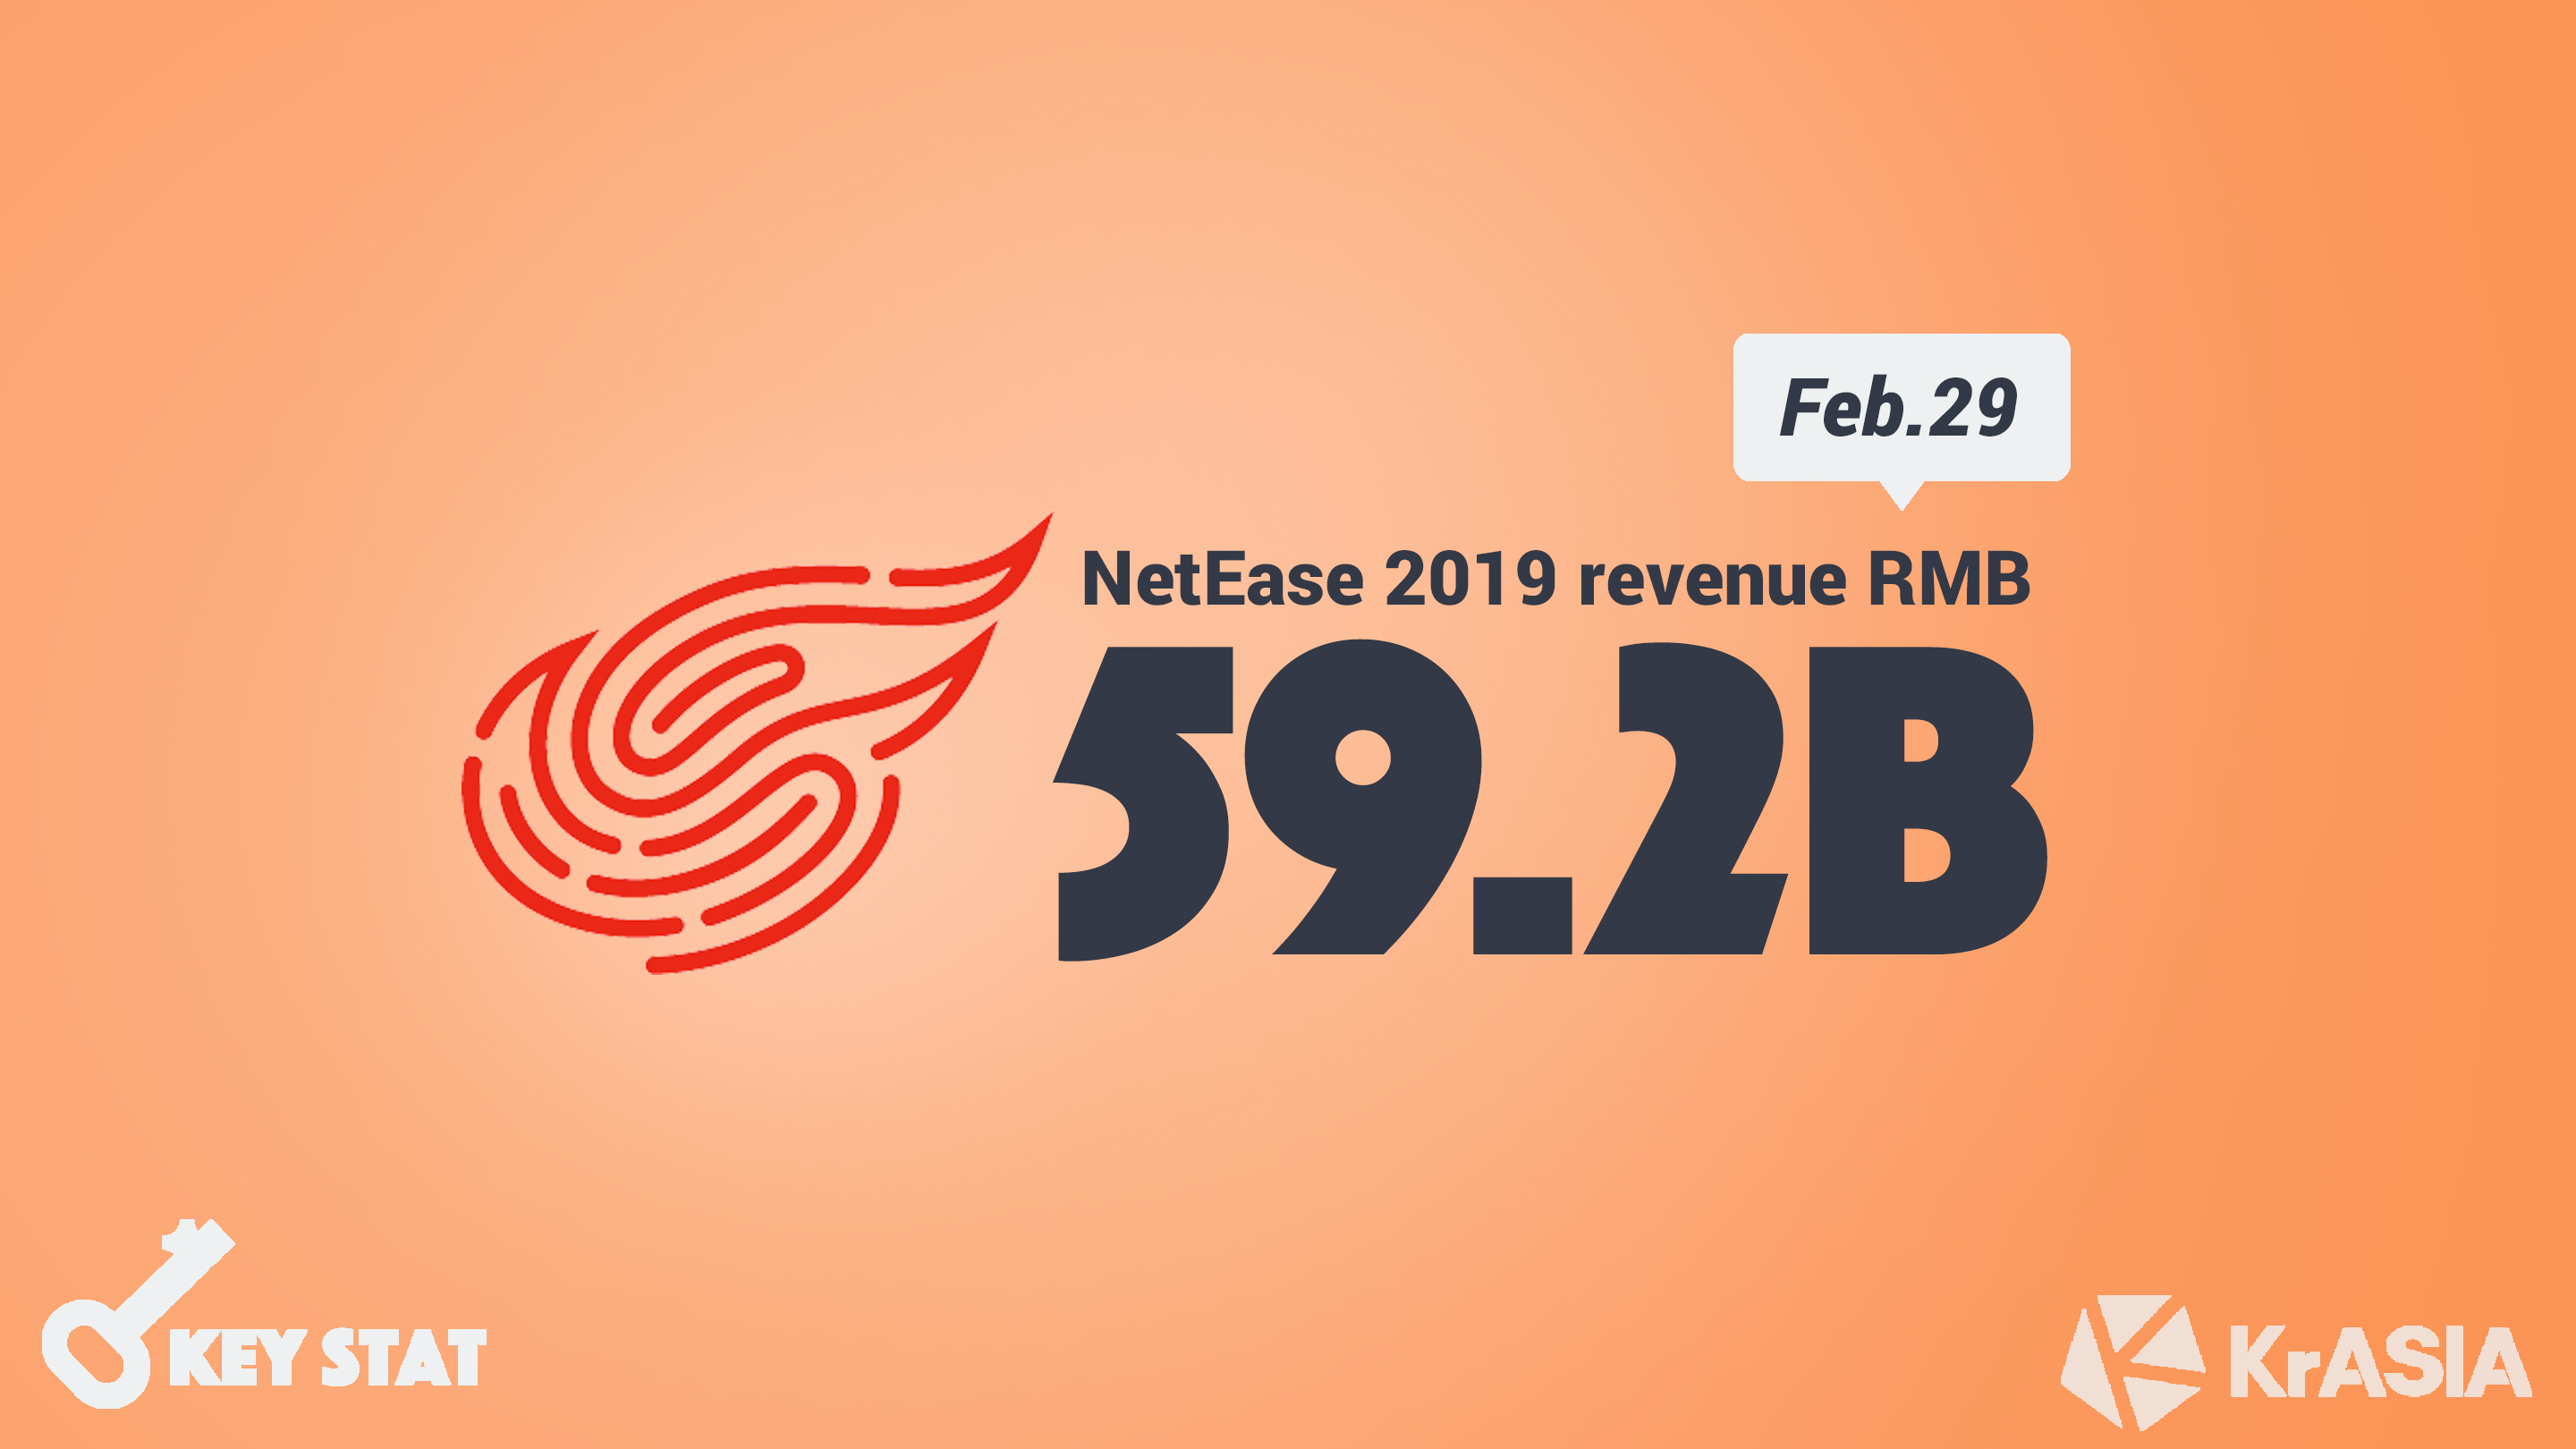 KEY STAT | NetEase 2019 revenue reaches USD 8.5 billion on gaming growth